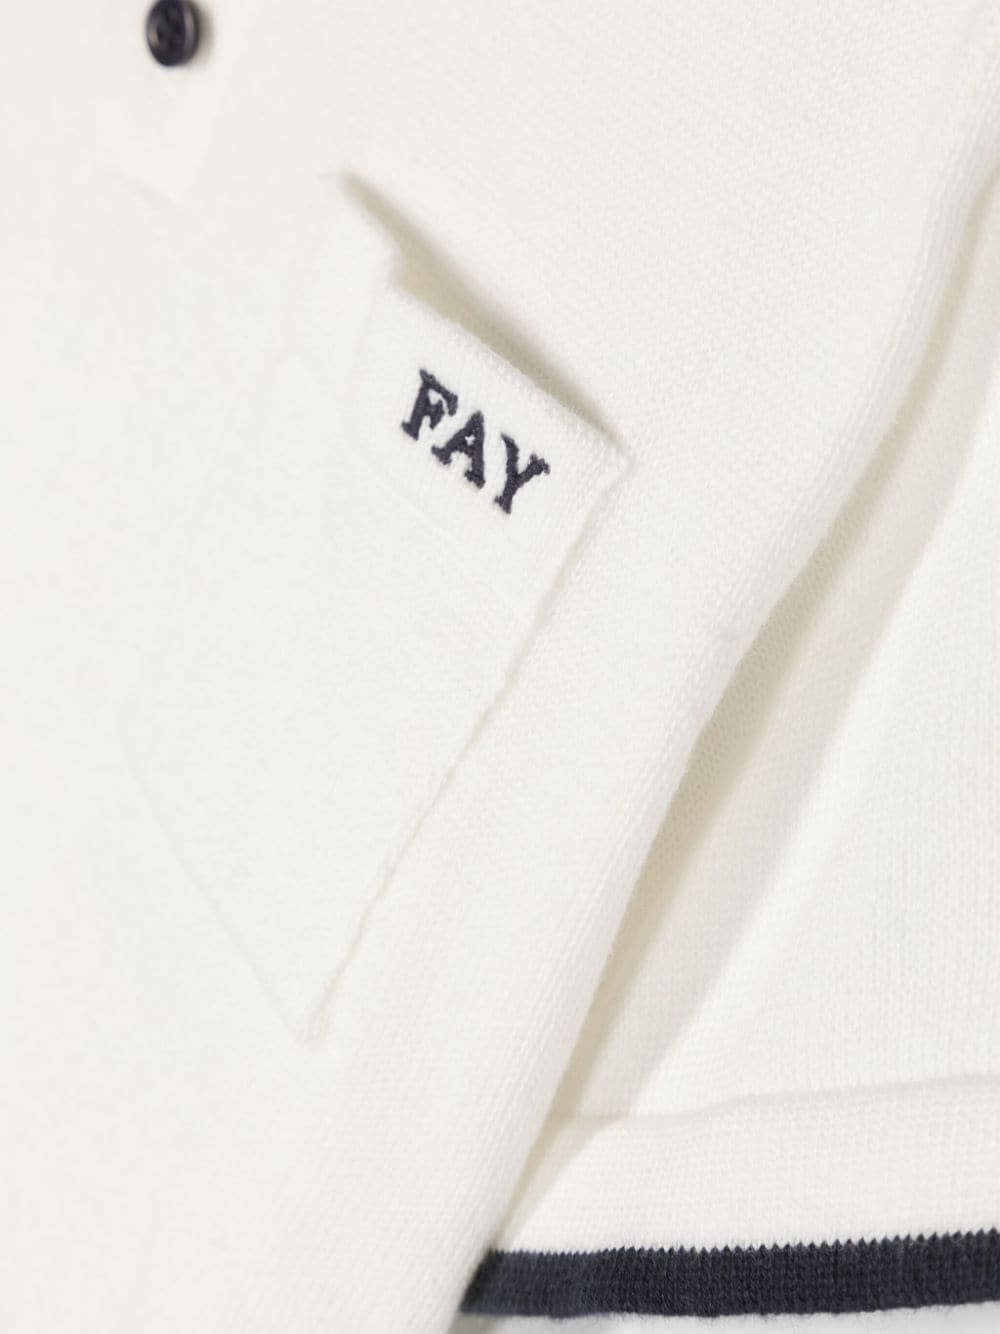 Shop Fay White Polo Shirt With Logo And Blue Stripes